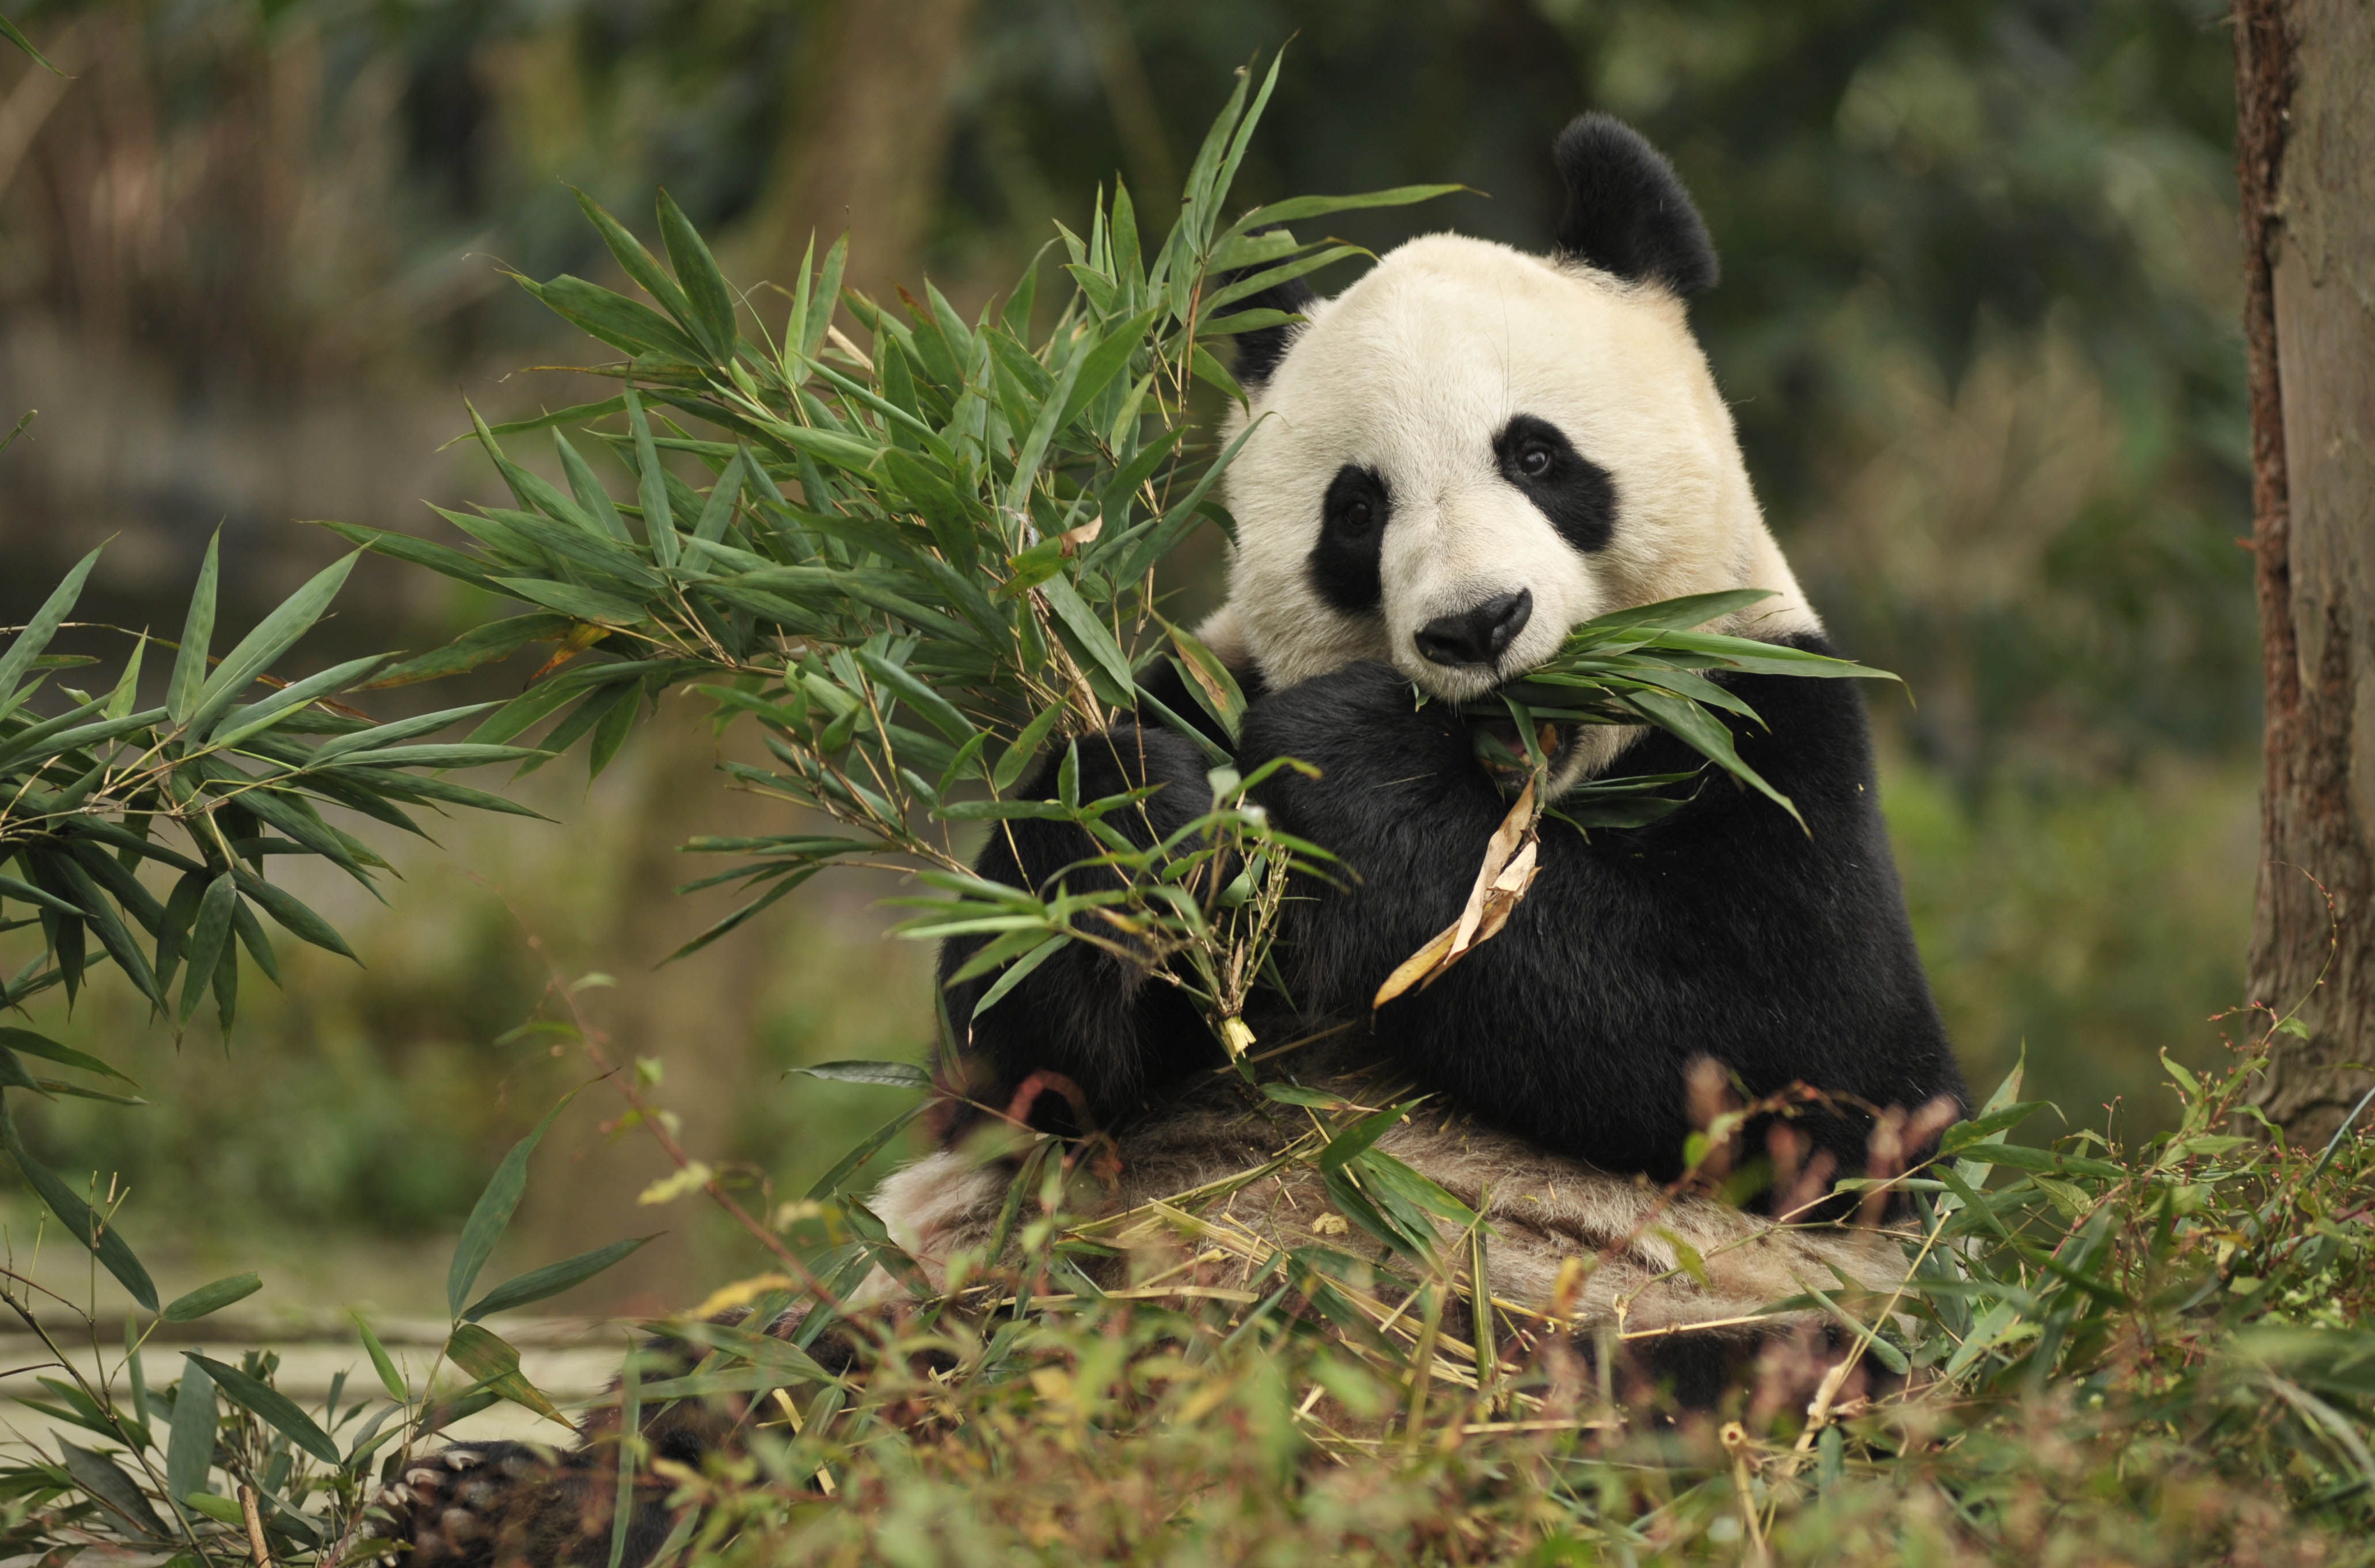 Go Chengdu - Your Guide to Chengdu, City of the Giant Panda